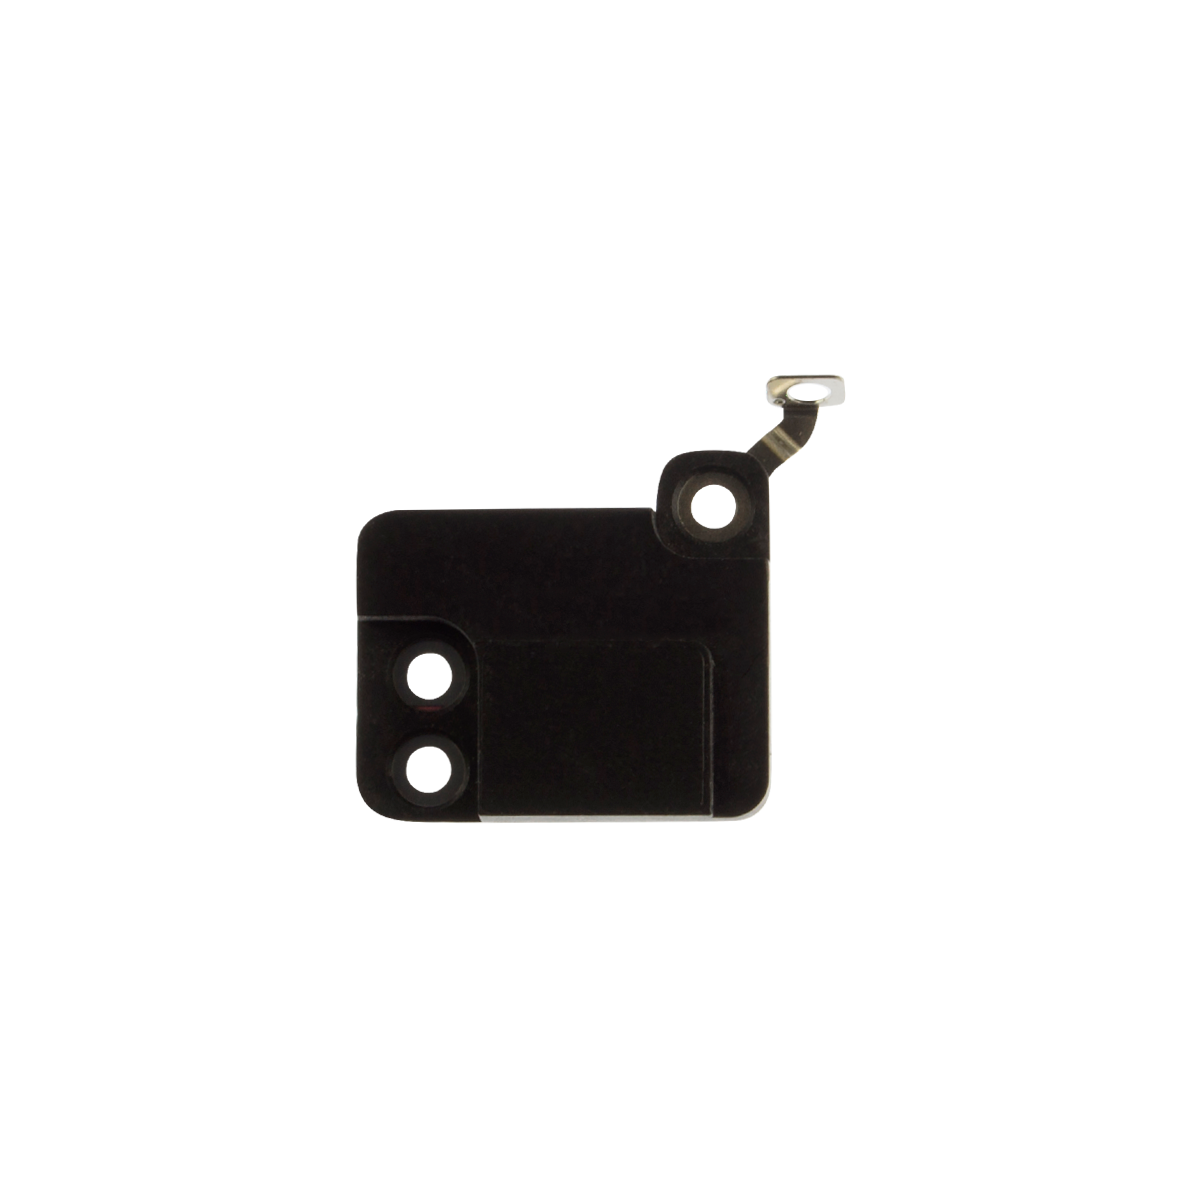 iPhone 7 Plus Wifi Antenna Plastic Bracket